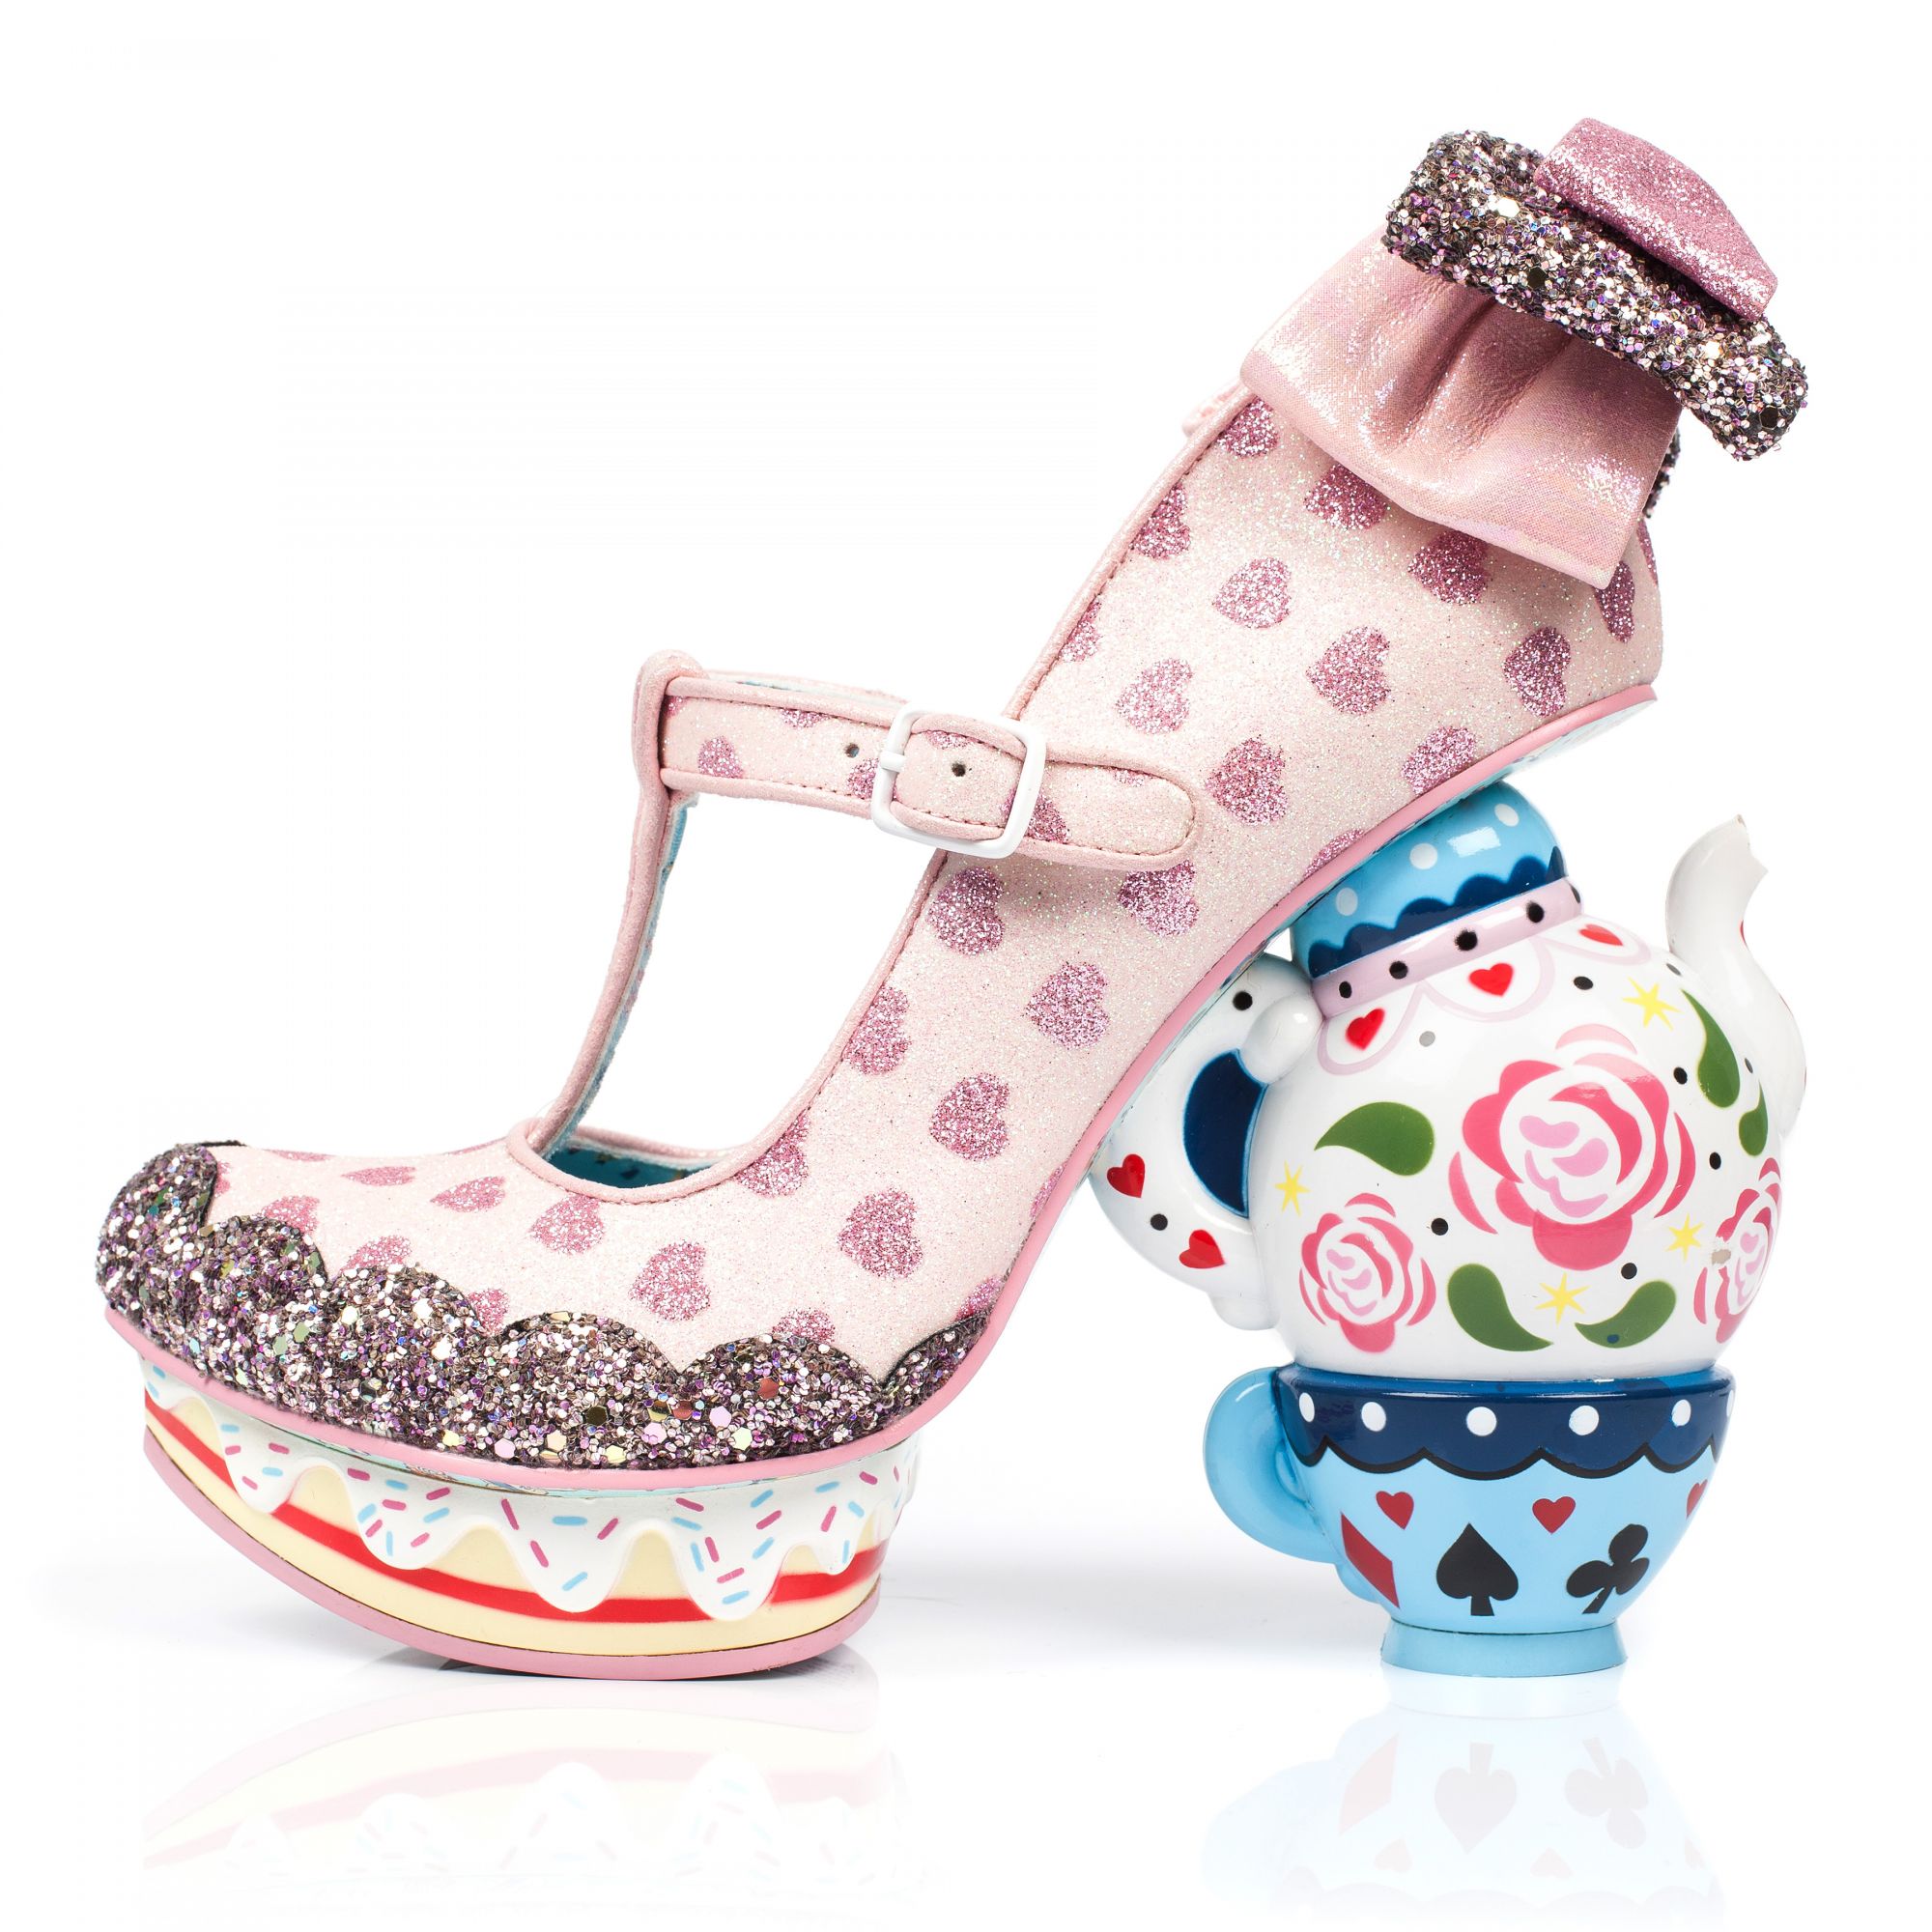 IRREGULAR CHOICE Irregular Choice Alice in Wonderland Collection: My Cup of  Tea Heels 4296-03A - Shiekh